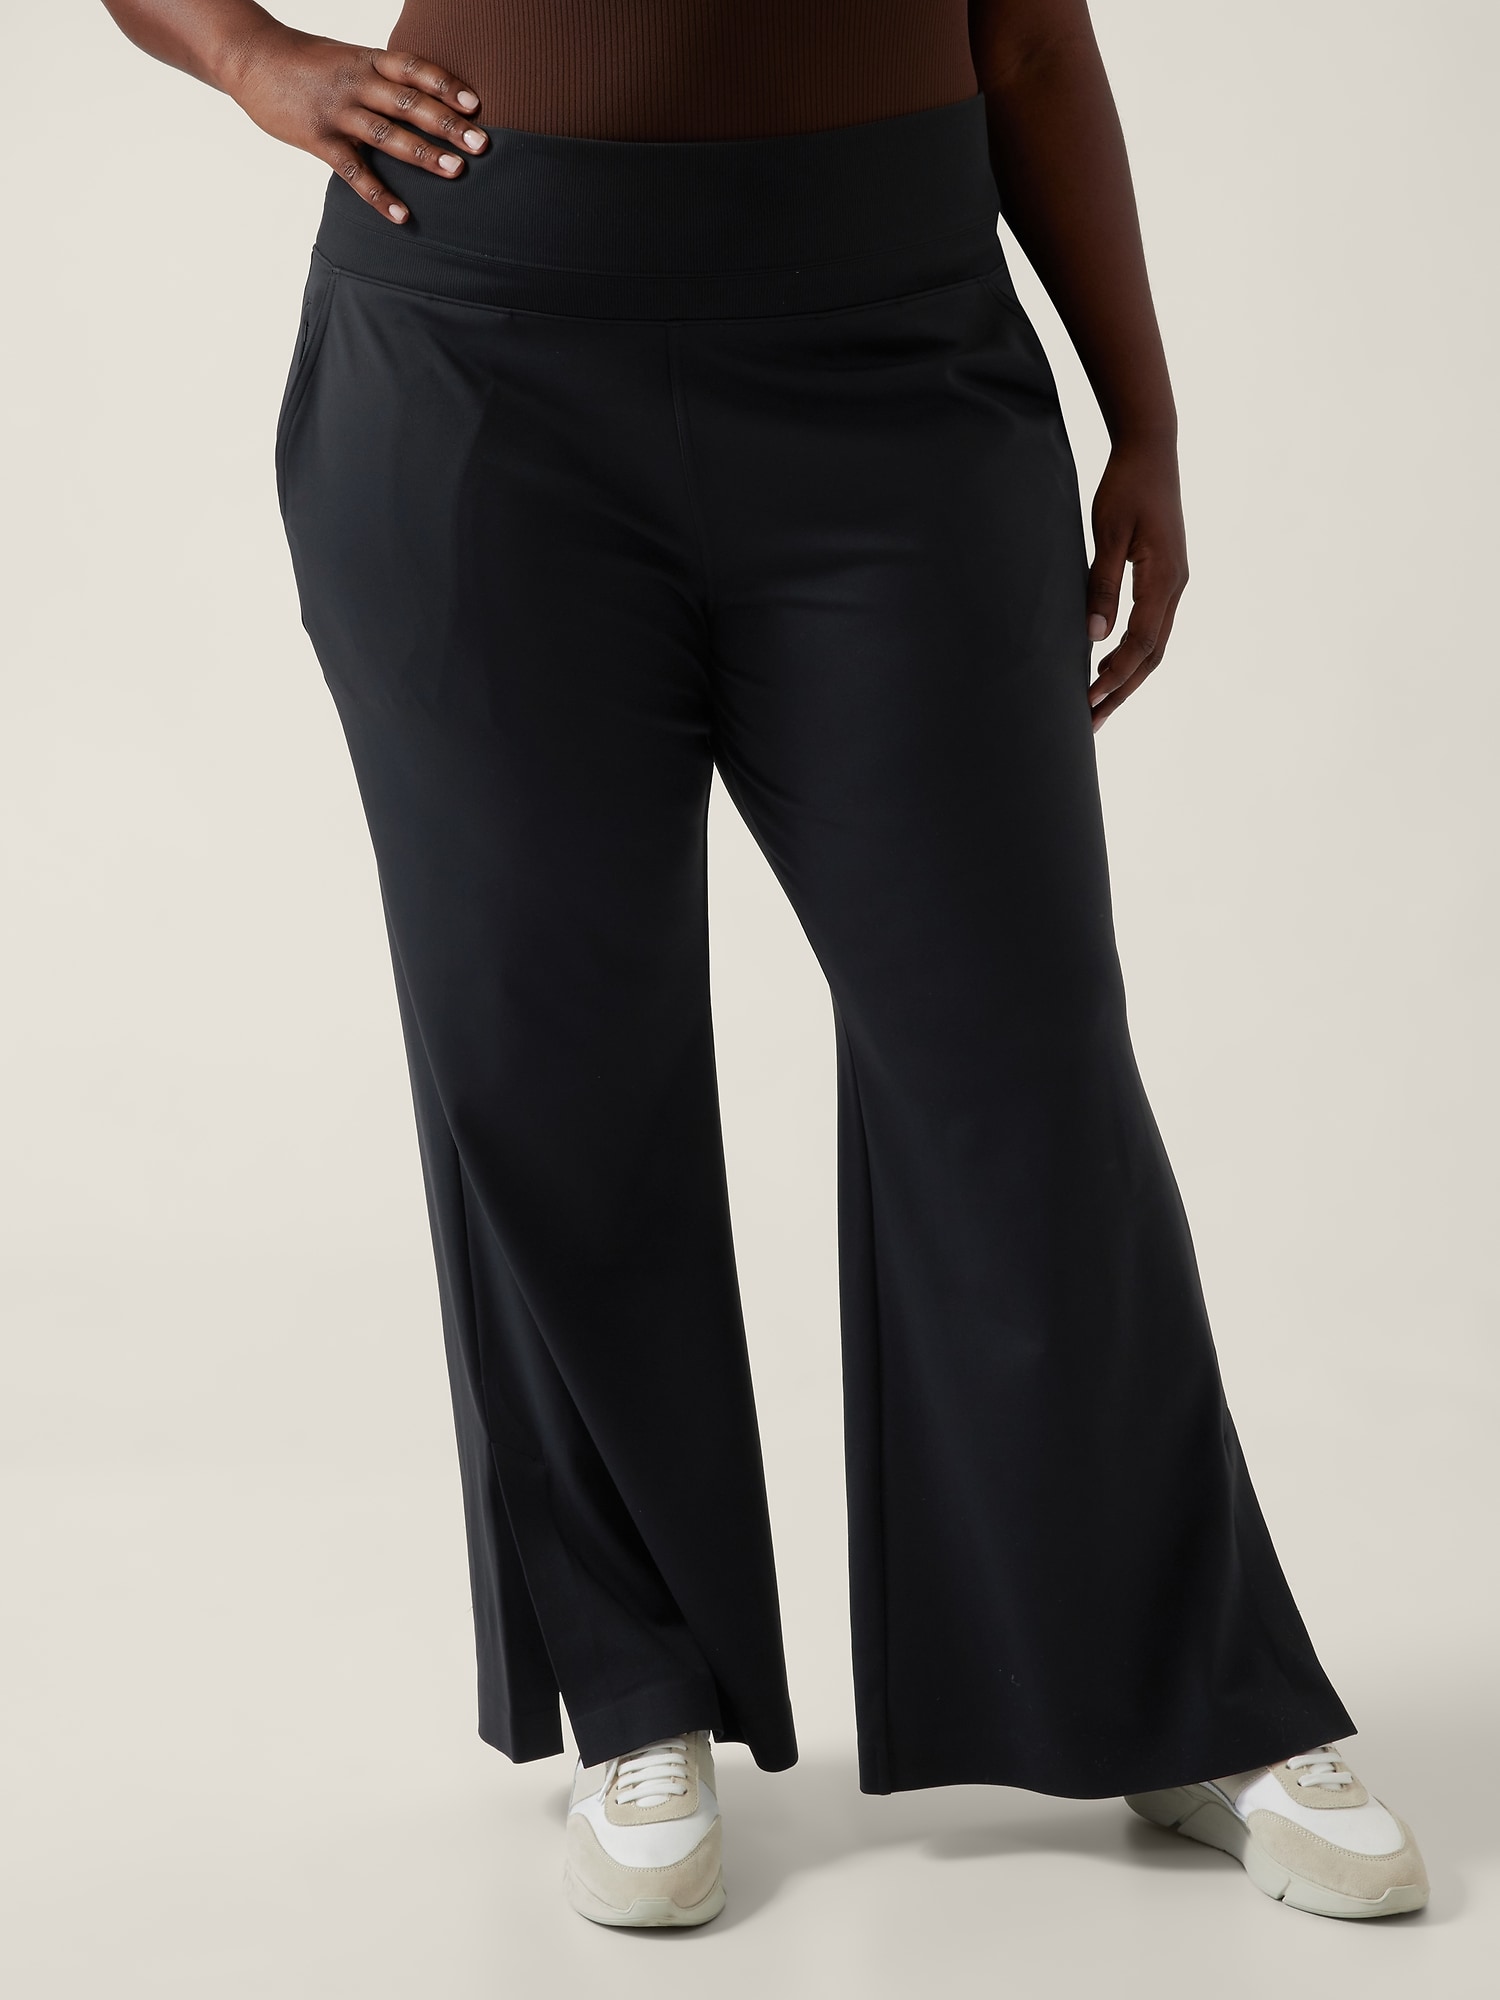 Athleta Venice Flare Pant, Black, Size XL Regular - Athletic apparel